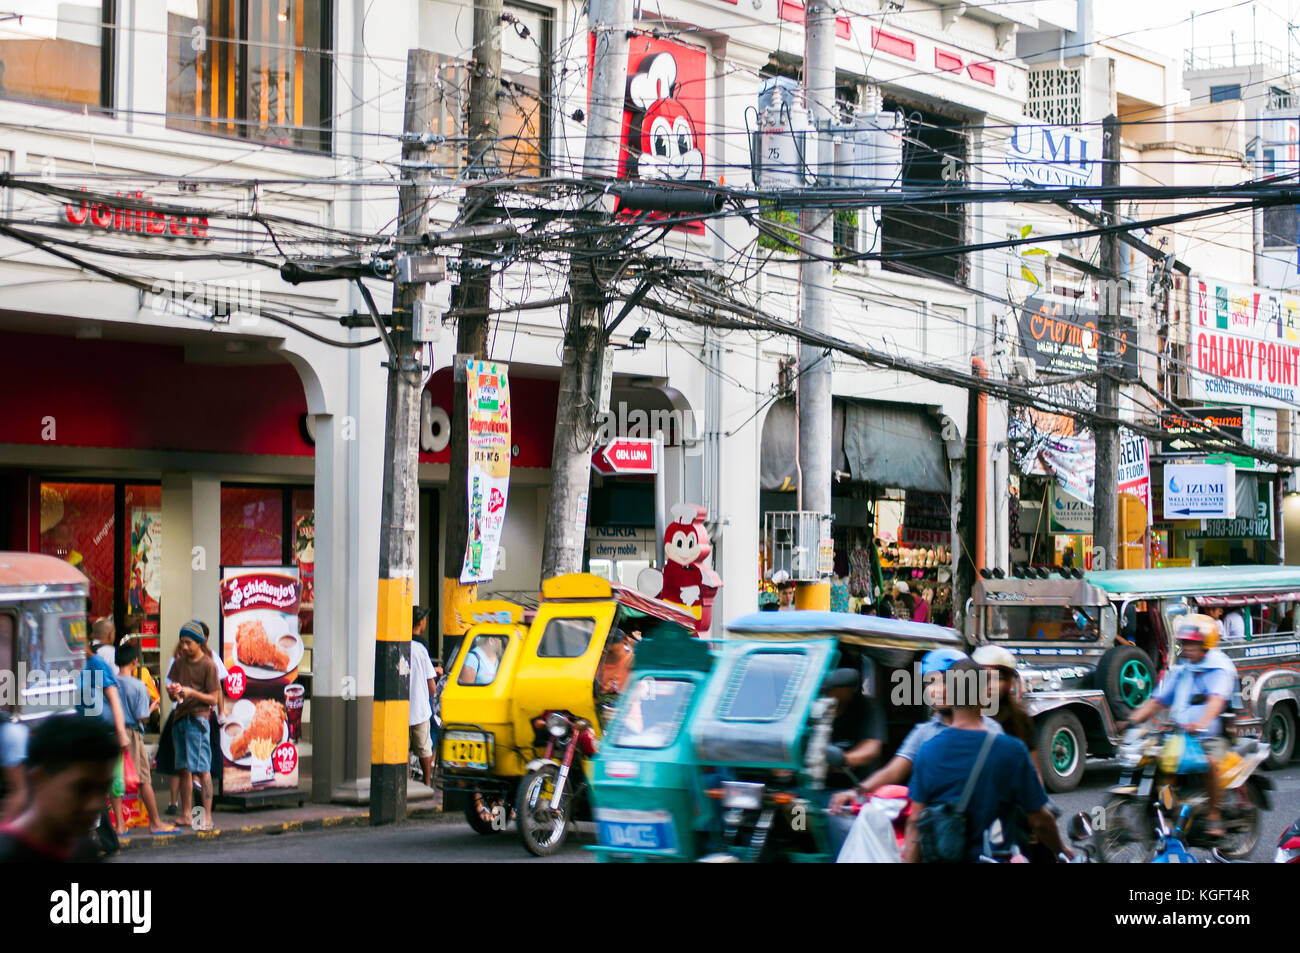 Elias angeles scène de rue, de la ville de Naga, camarines sur, Bicol, philippines Banque D'Images